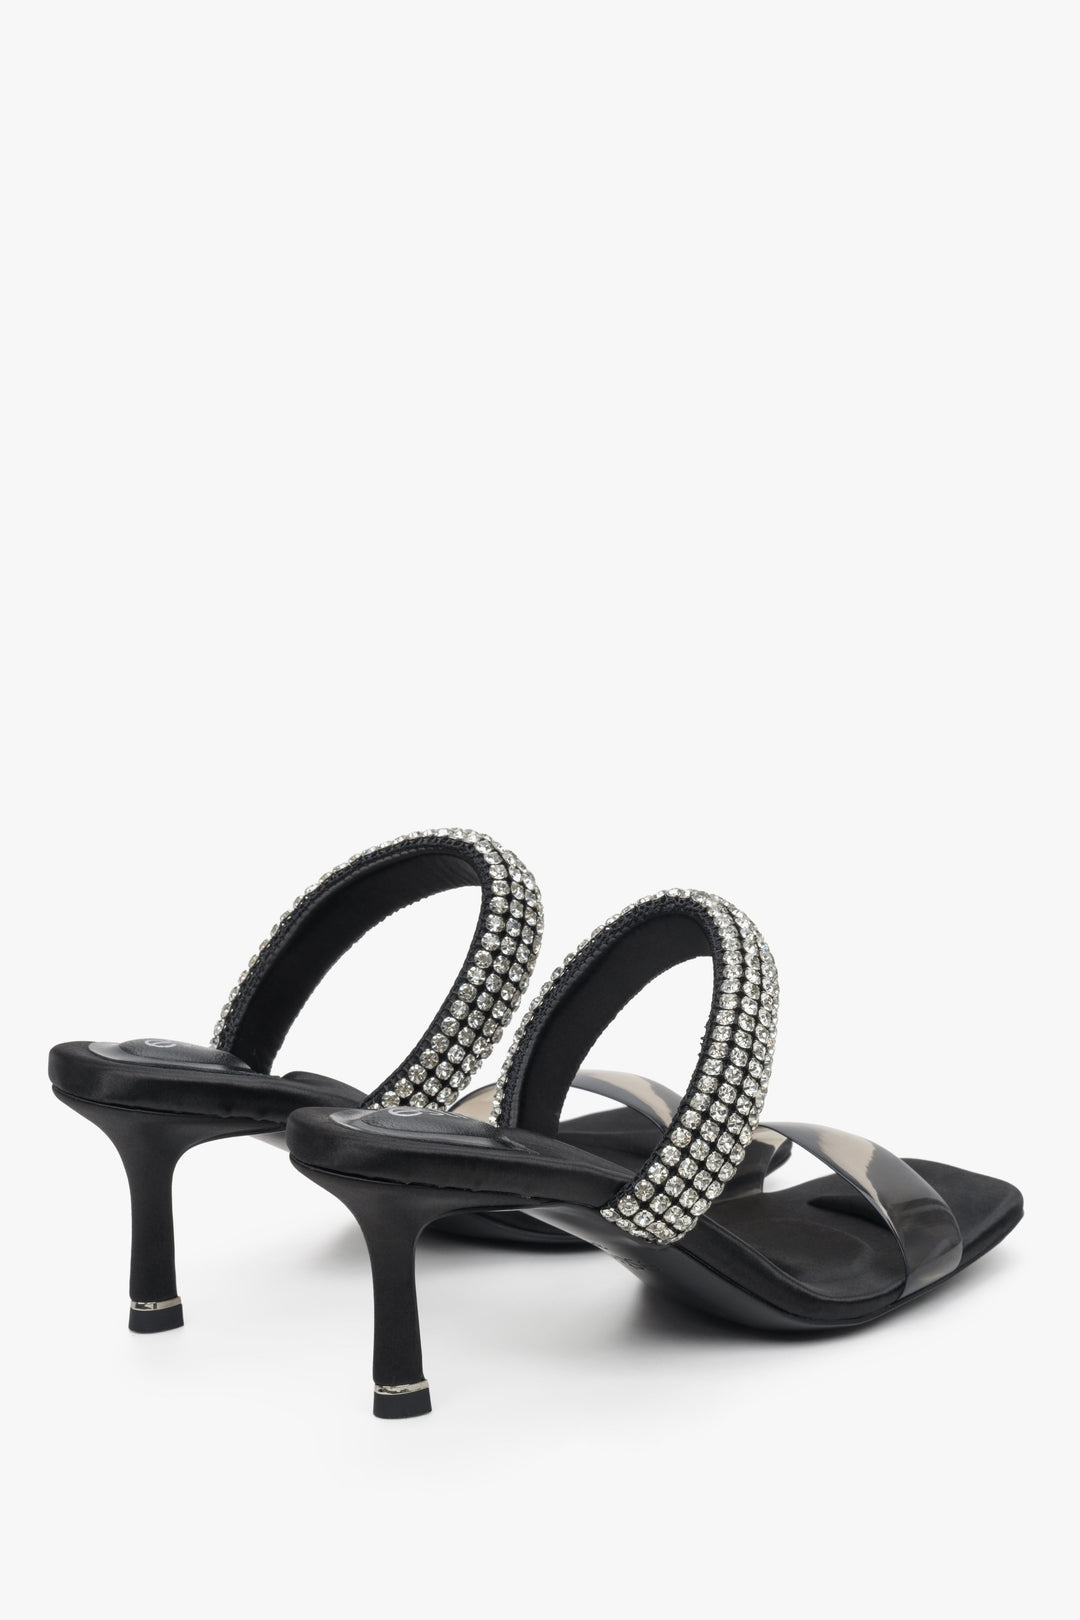 Women's black stiletto slide sandals with zirconia, Estro brand - close-up on heels and heel line.